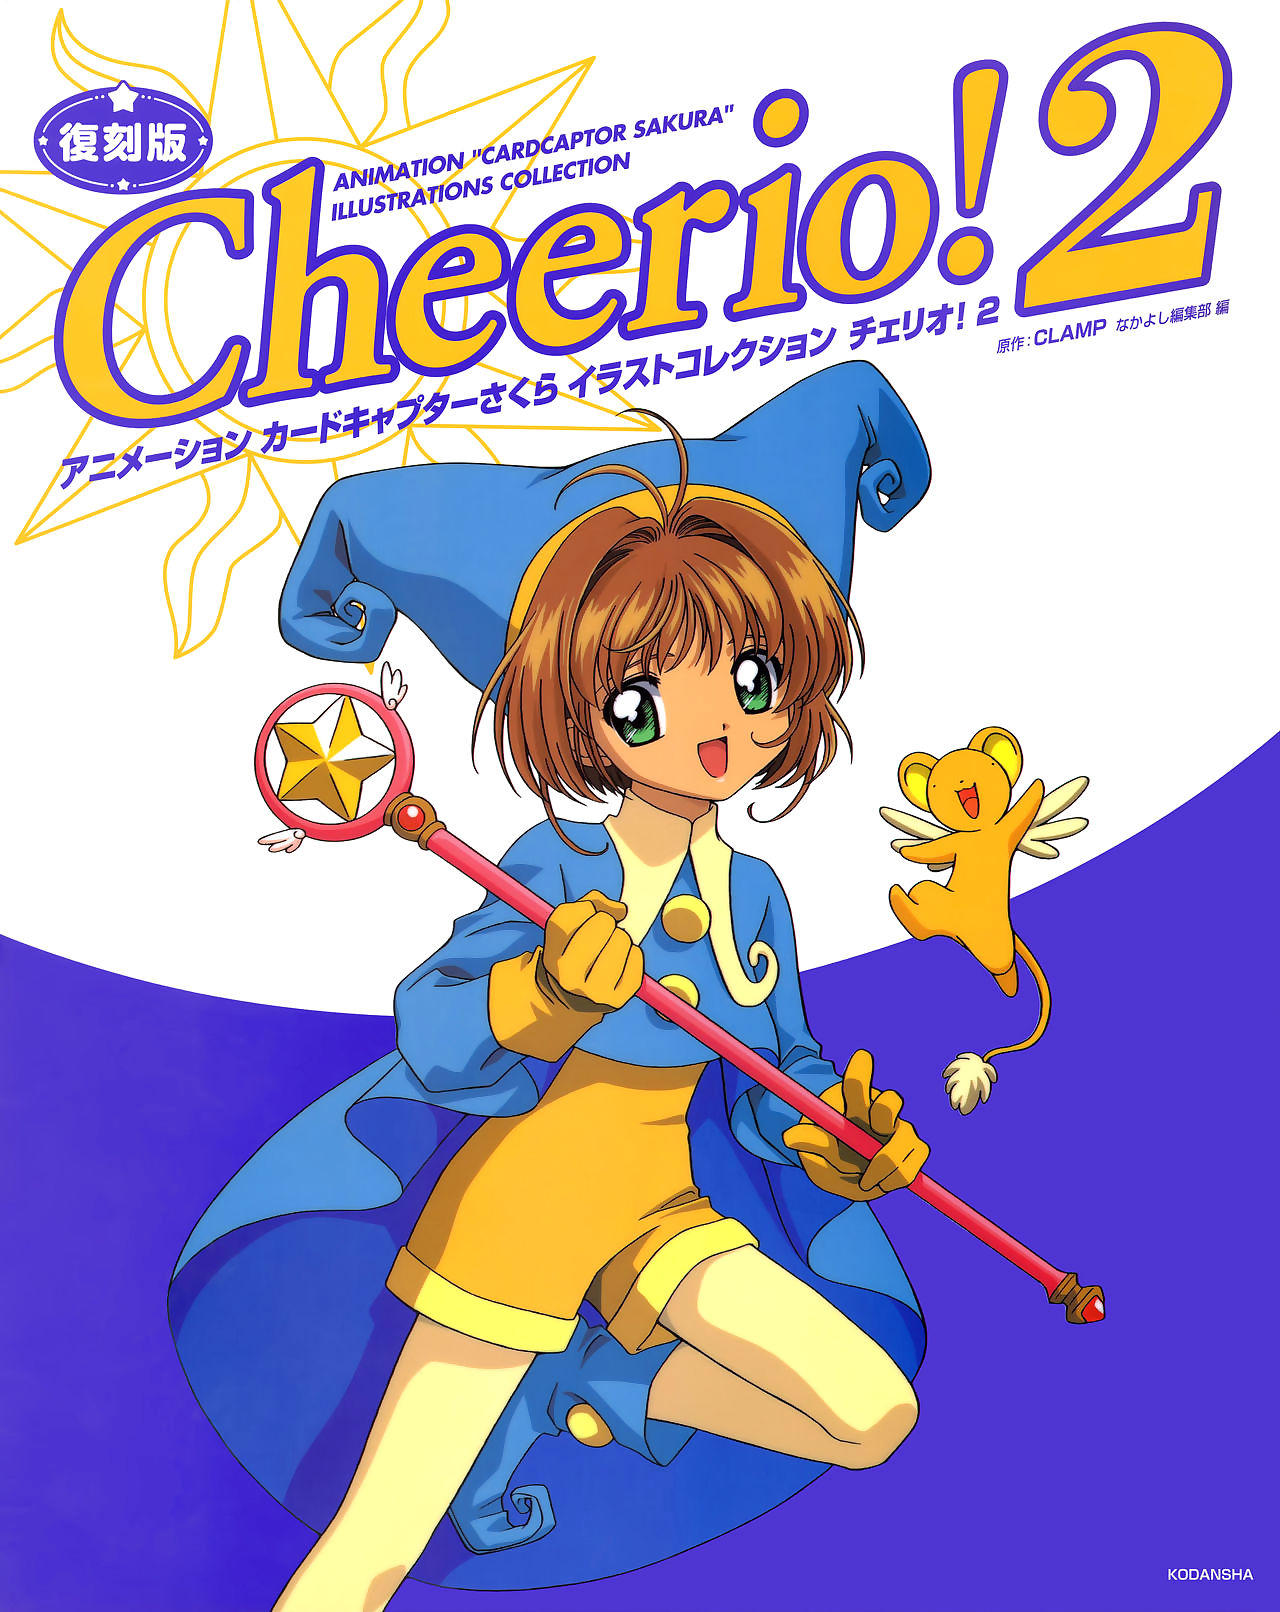 Cheerio! 2 - Fire Cardcaptor Sakura Severed Piling